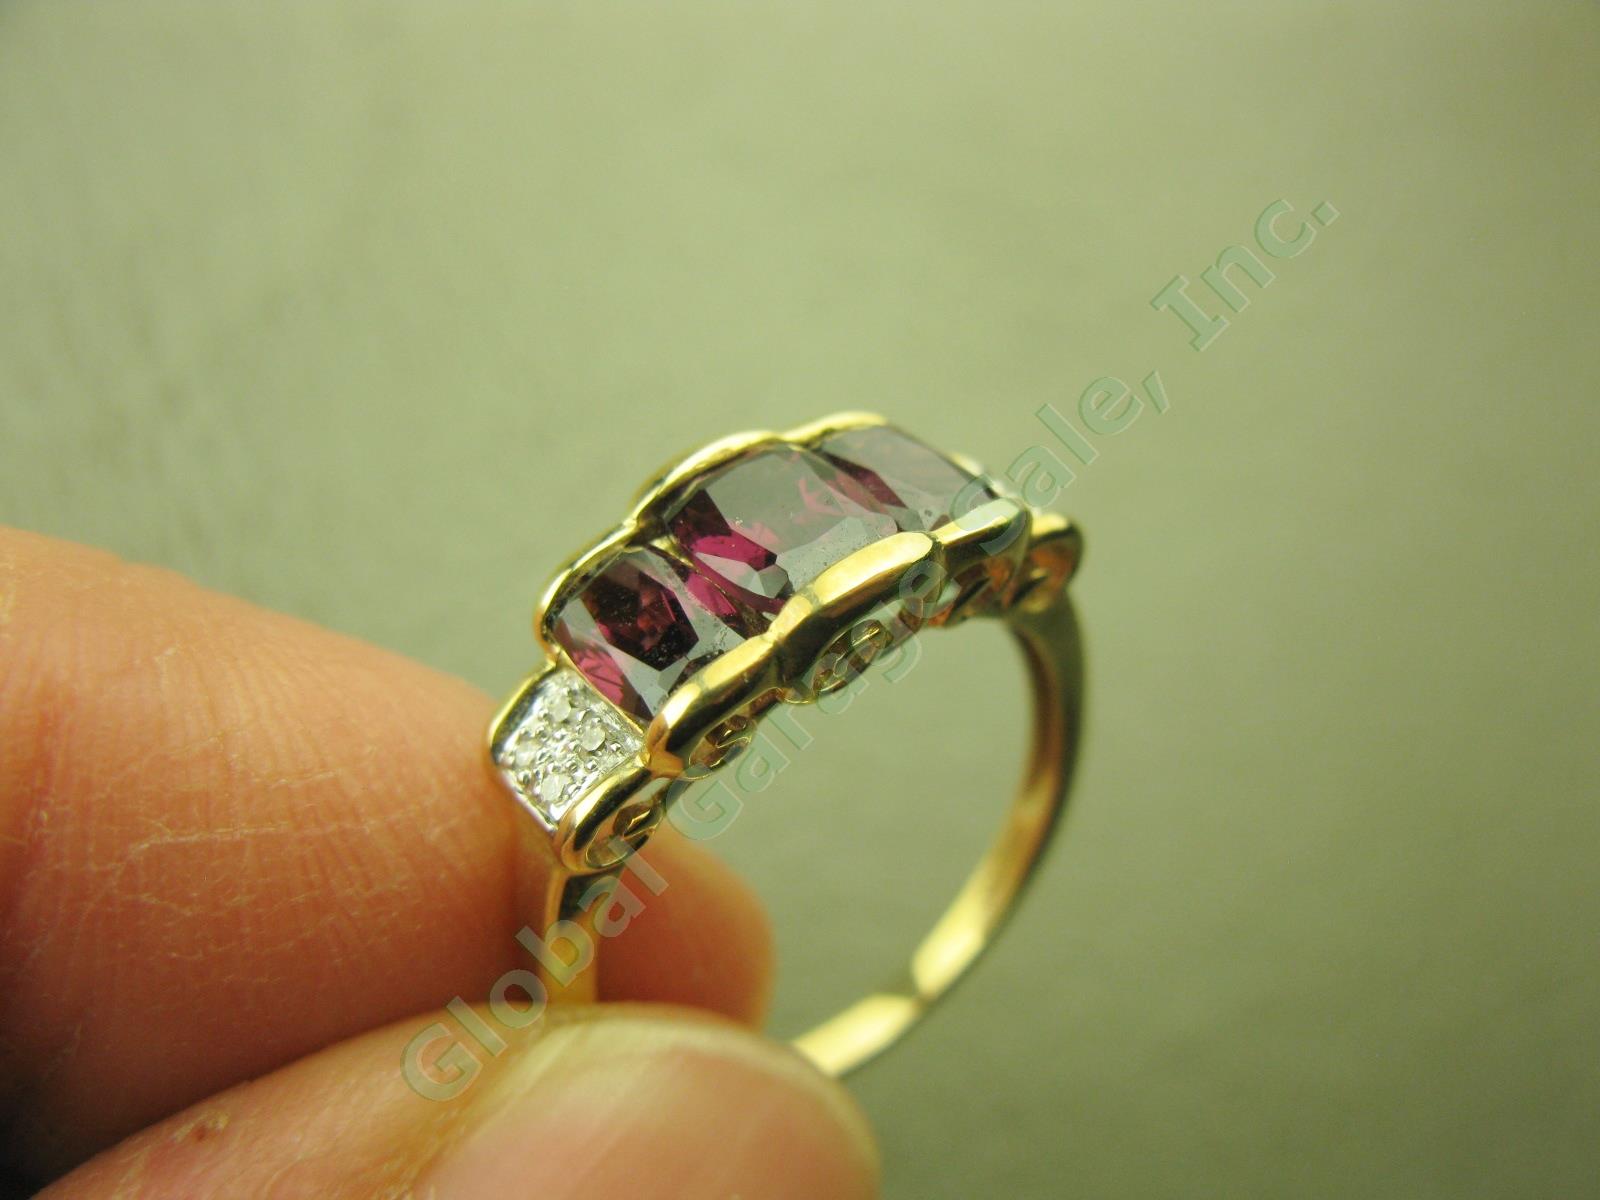 19x 14k 10k Gold Gemstone Rings Lot Earrings 57.7 Grams Not Scrap $1200+ Value!! 10